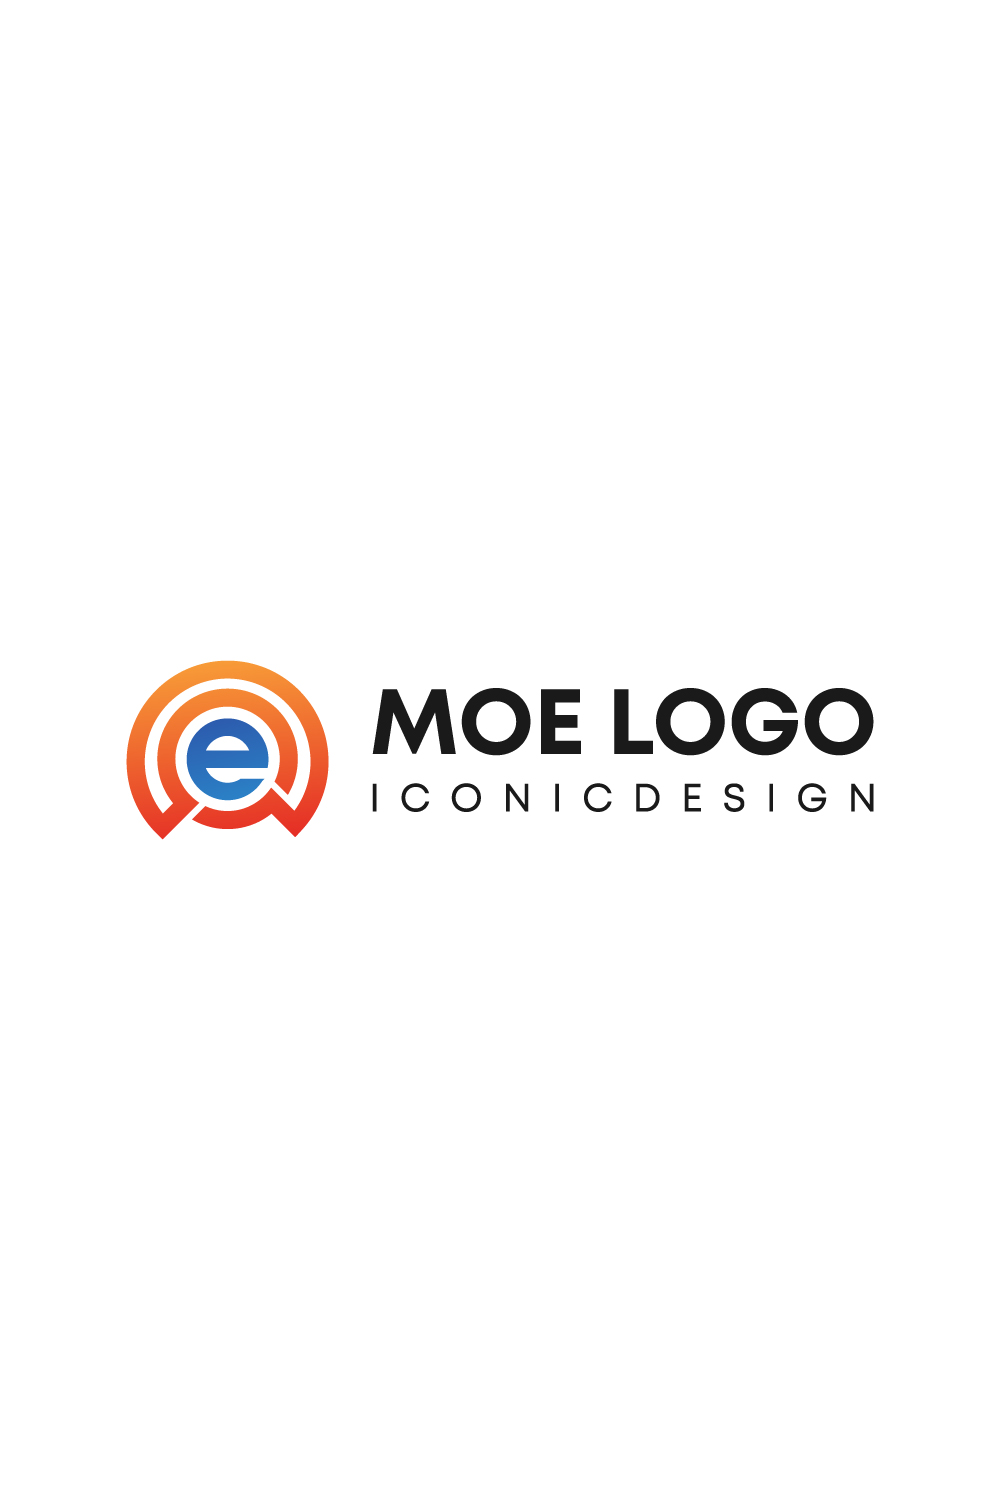 MOE logo pinterest preview image.